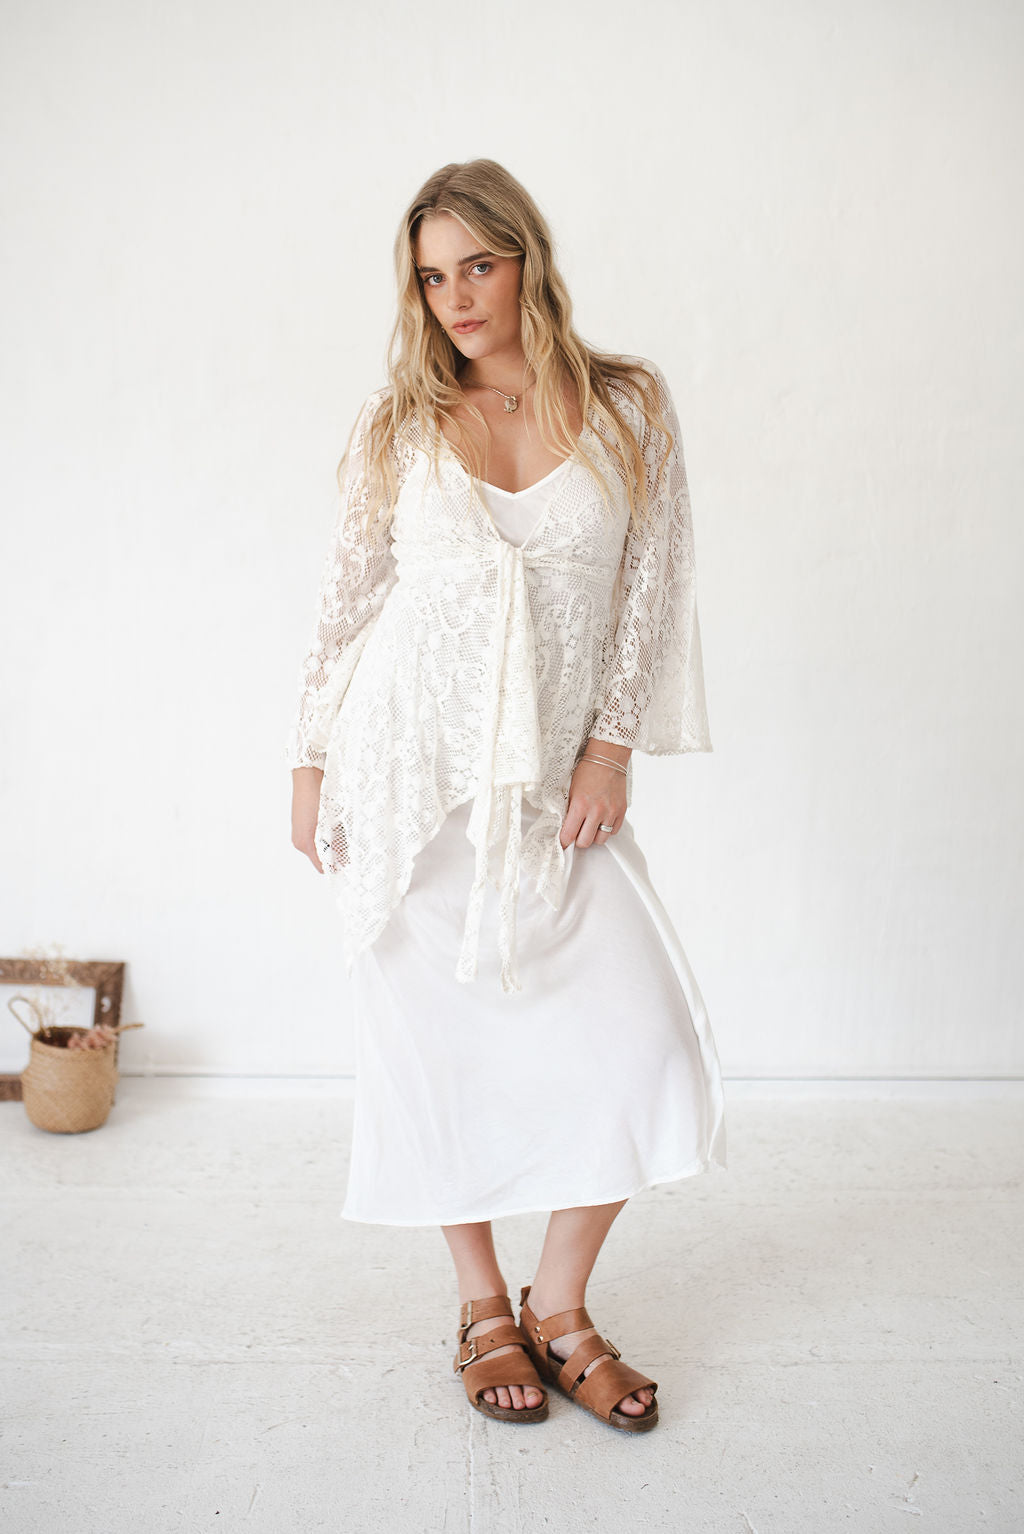 Buy White Boho Dresses, NZ  Best Boho Clothes & Tops Online